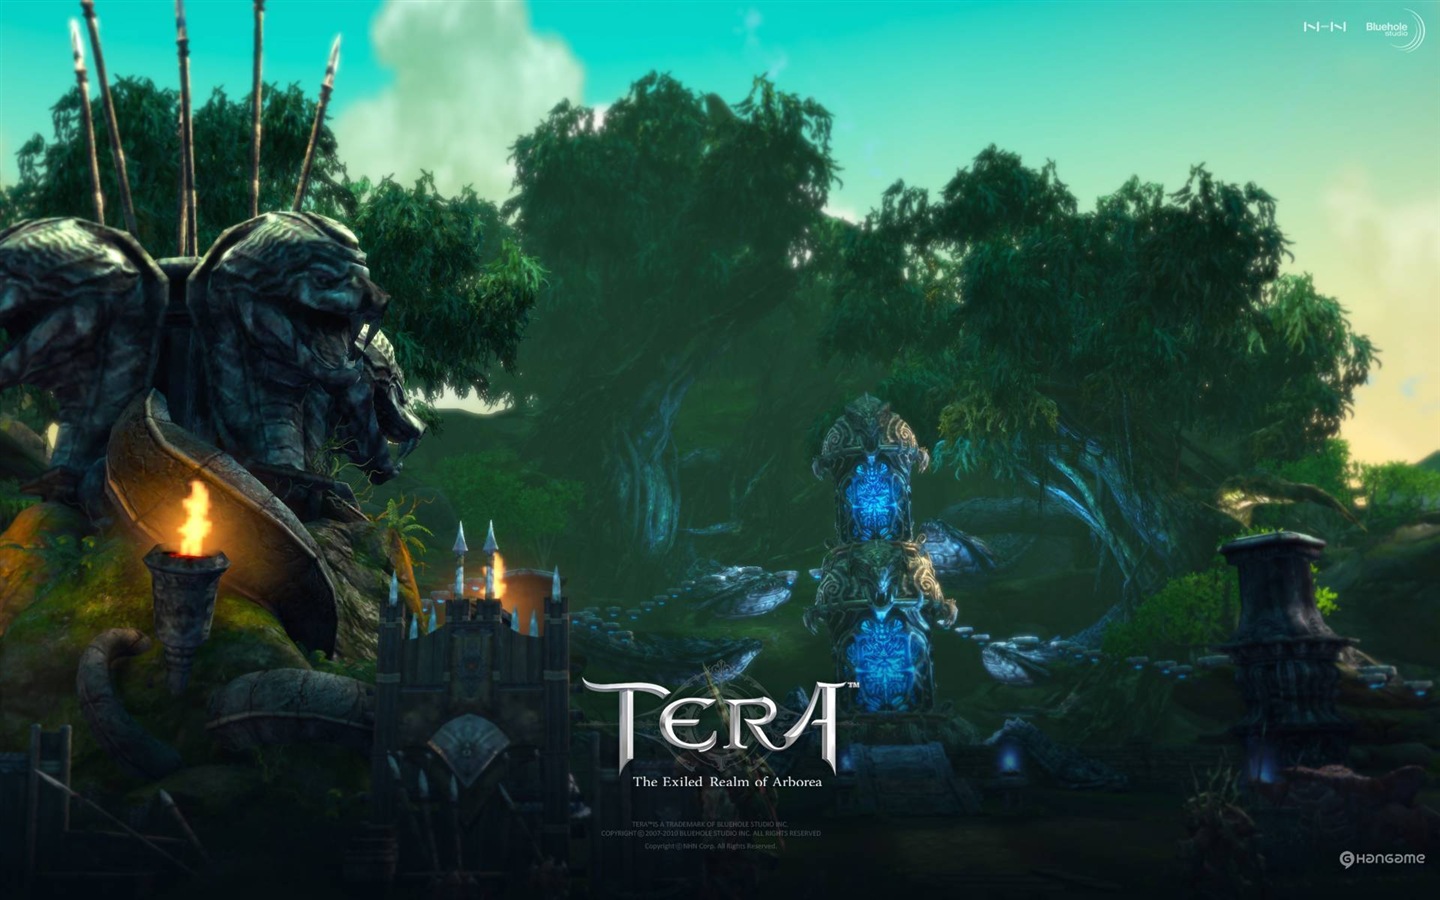 Tera HD game wallpapers #20 - 1440x900